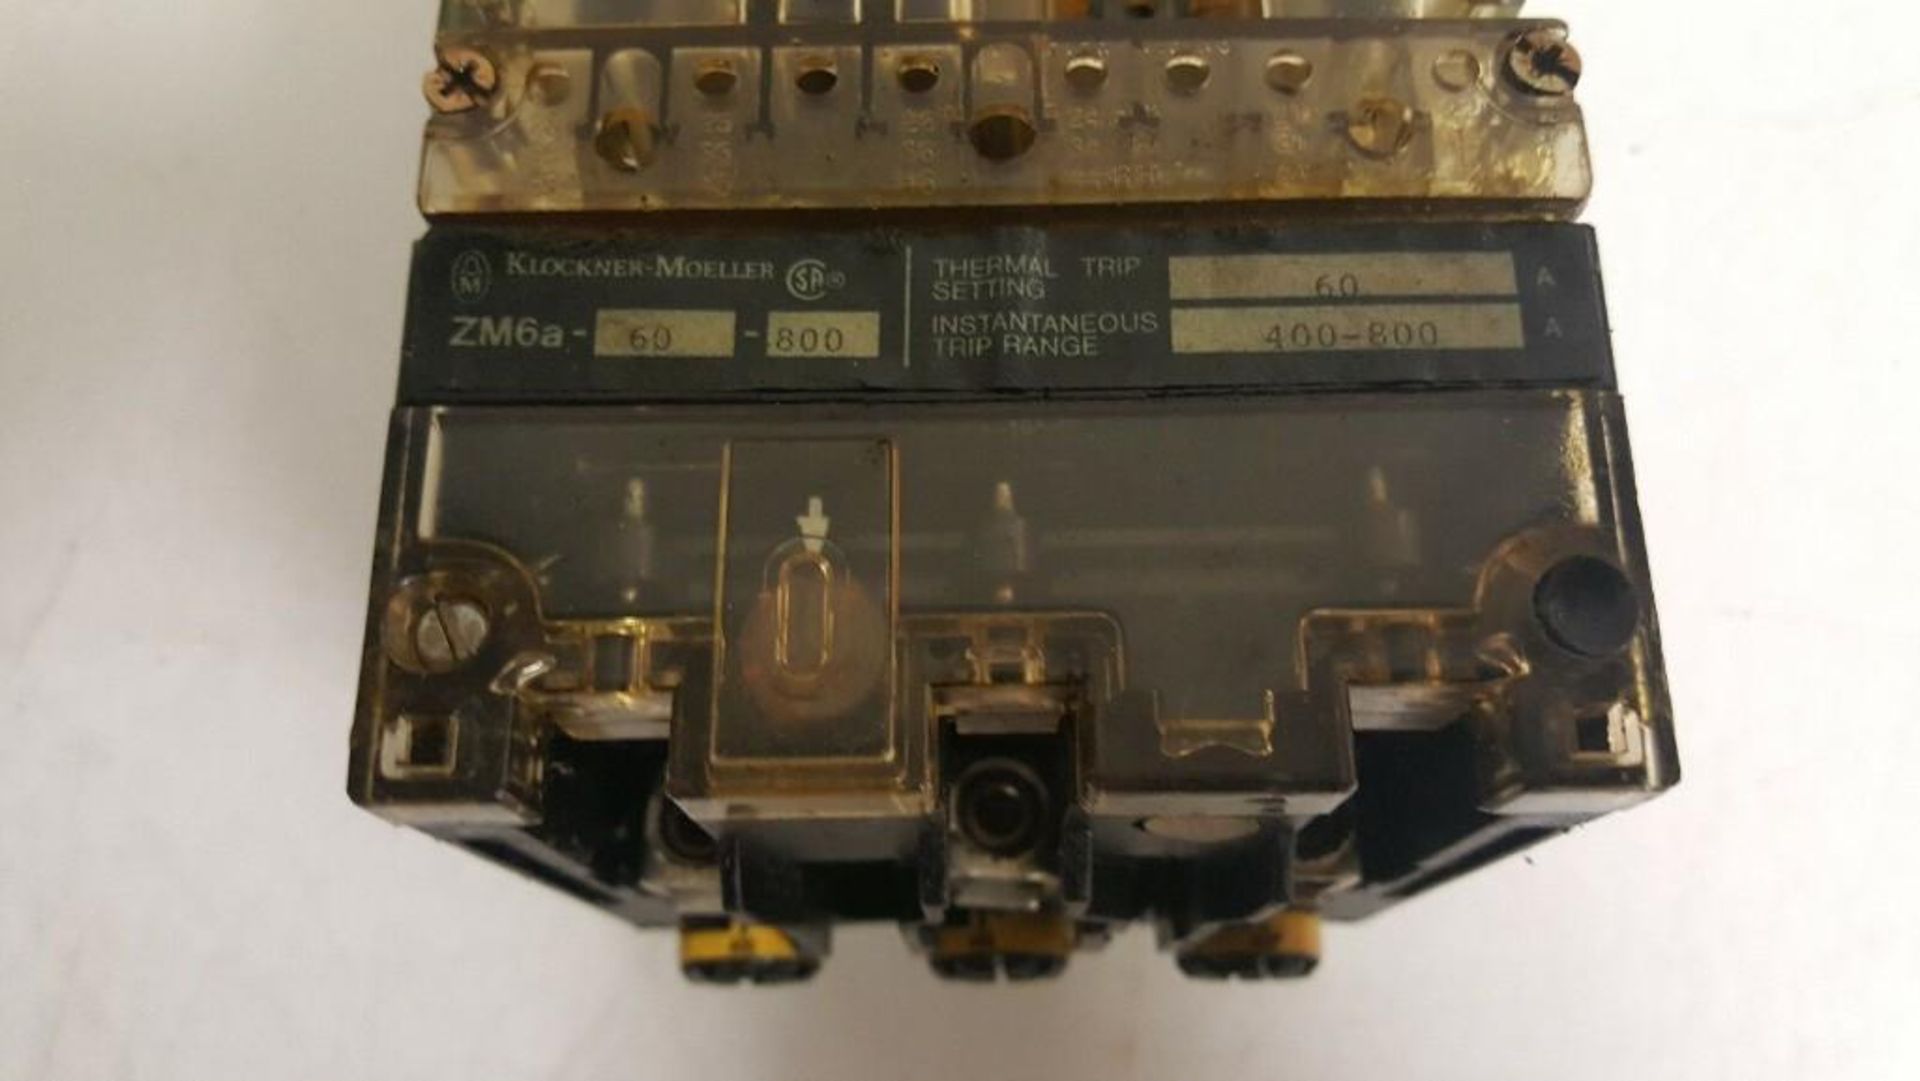 Klockner Moeller Breaker, NZM6B 63, ZM6a-60-800, 60A - Image 2 of 3